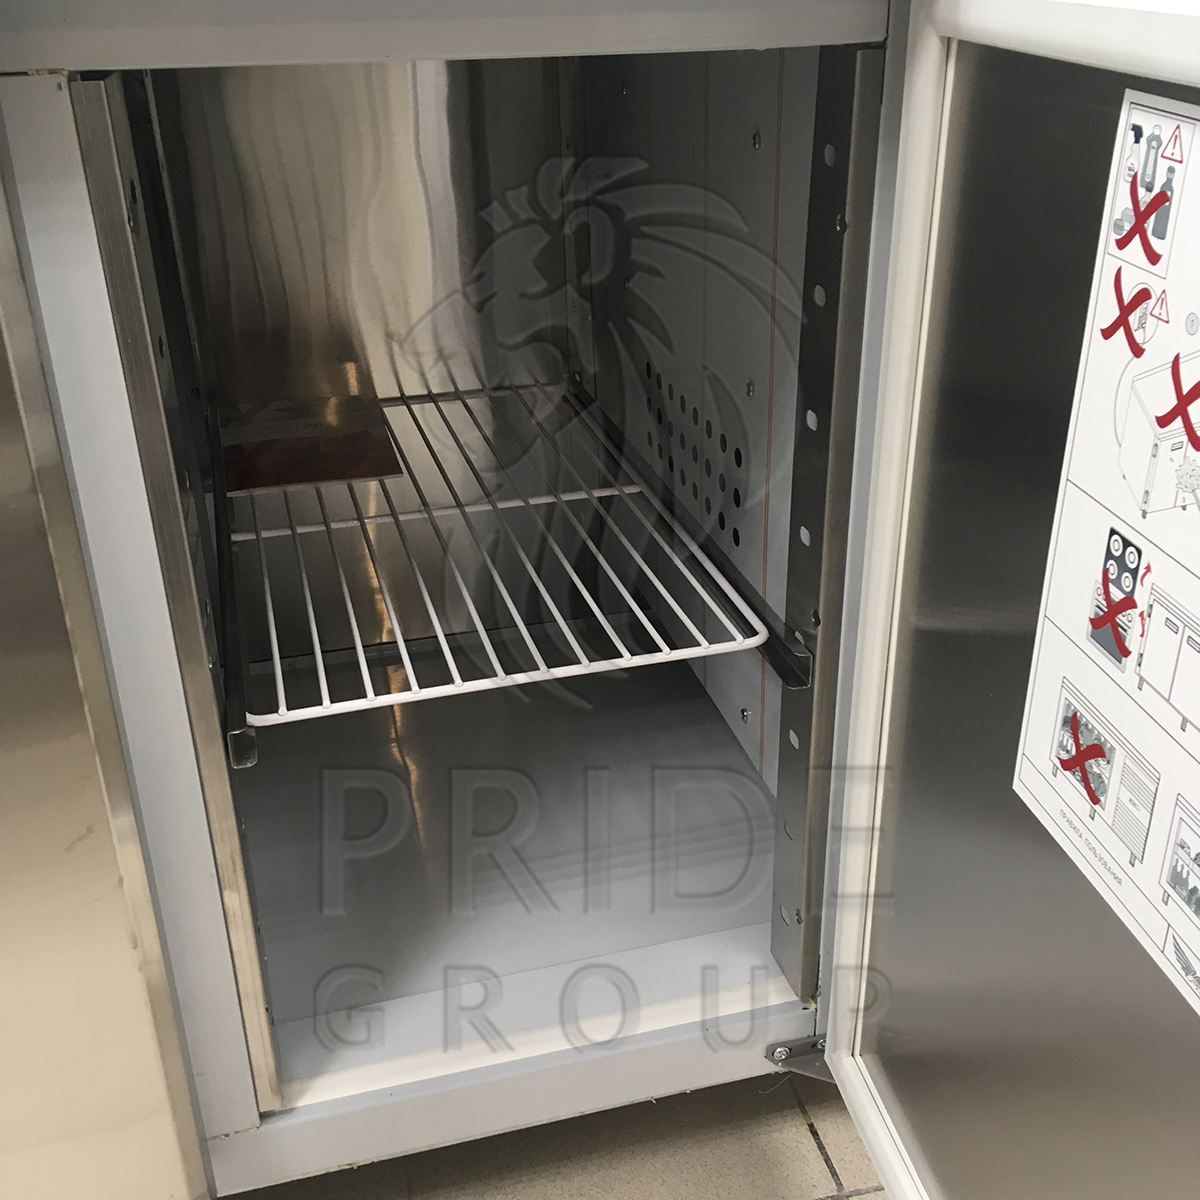 картинка Стол холодильный для пиццы Finist СХСпц-700-2 1400х700х850 мм